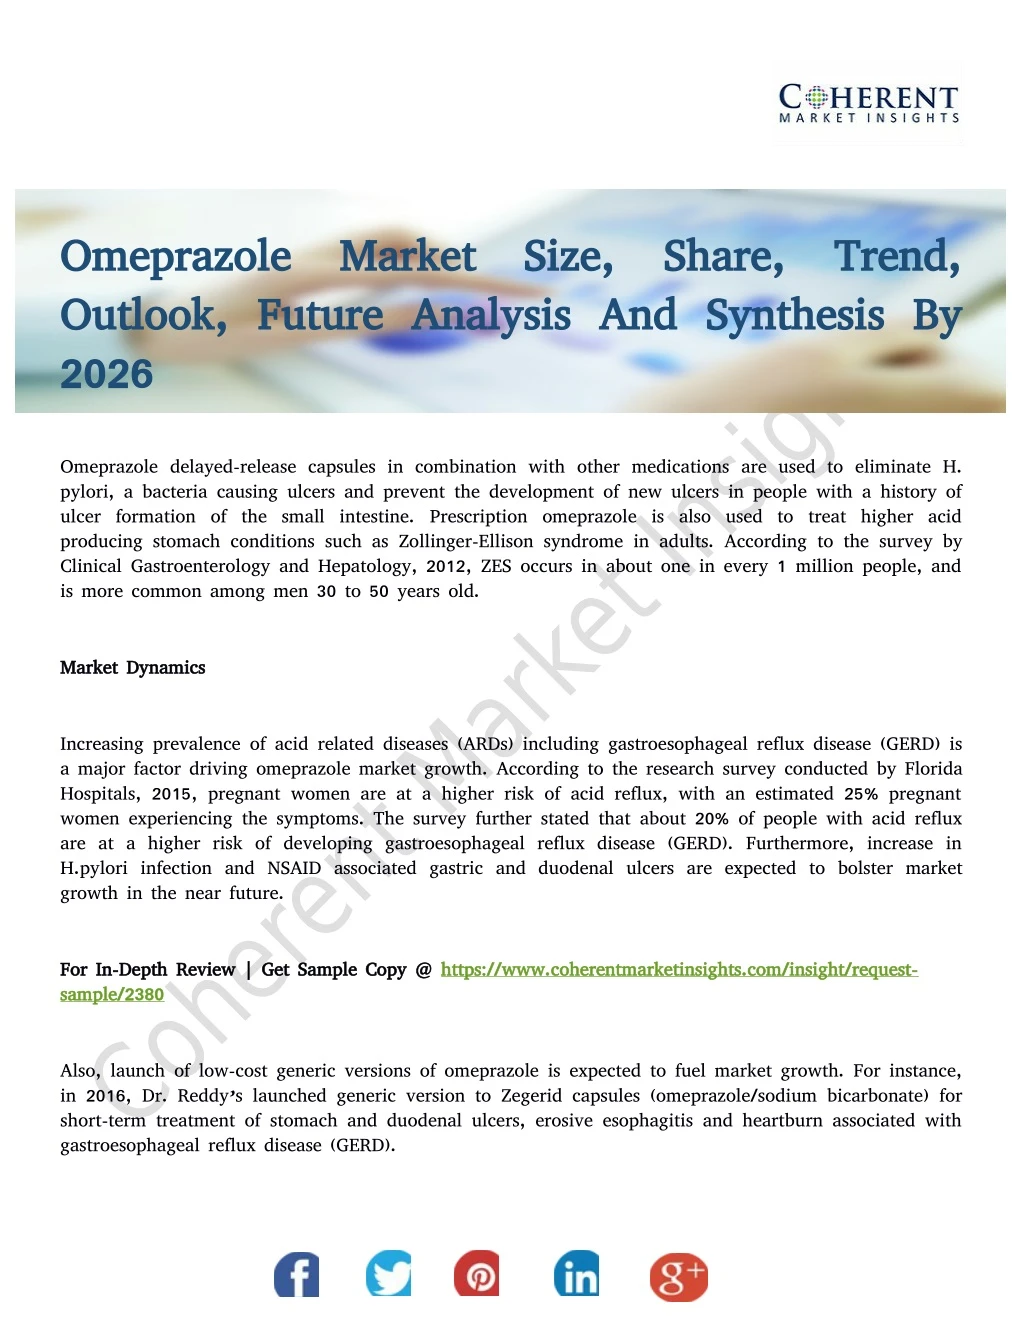 omeprazole omeprazole market size share trend n.